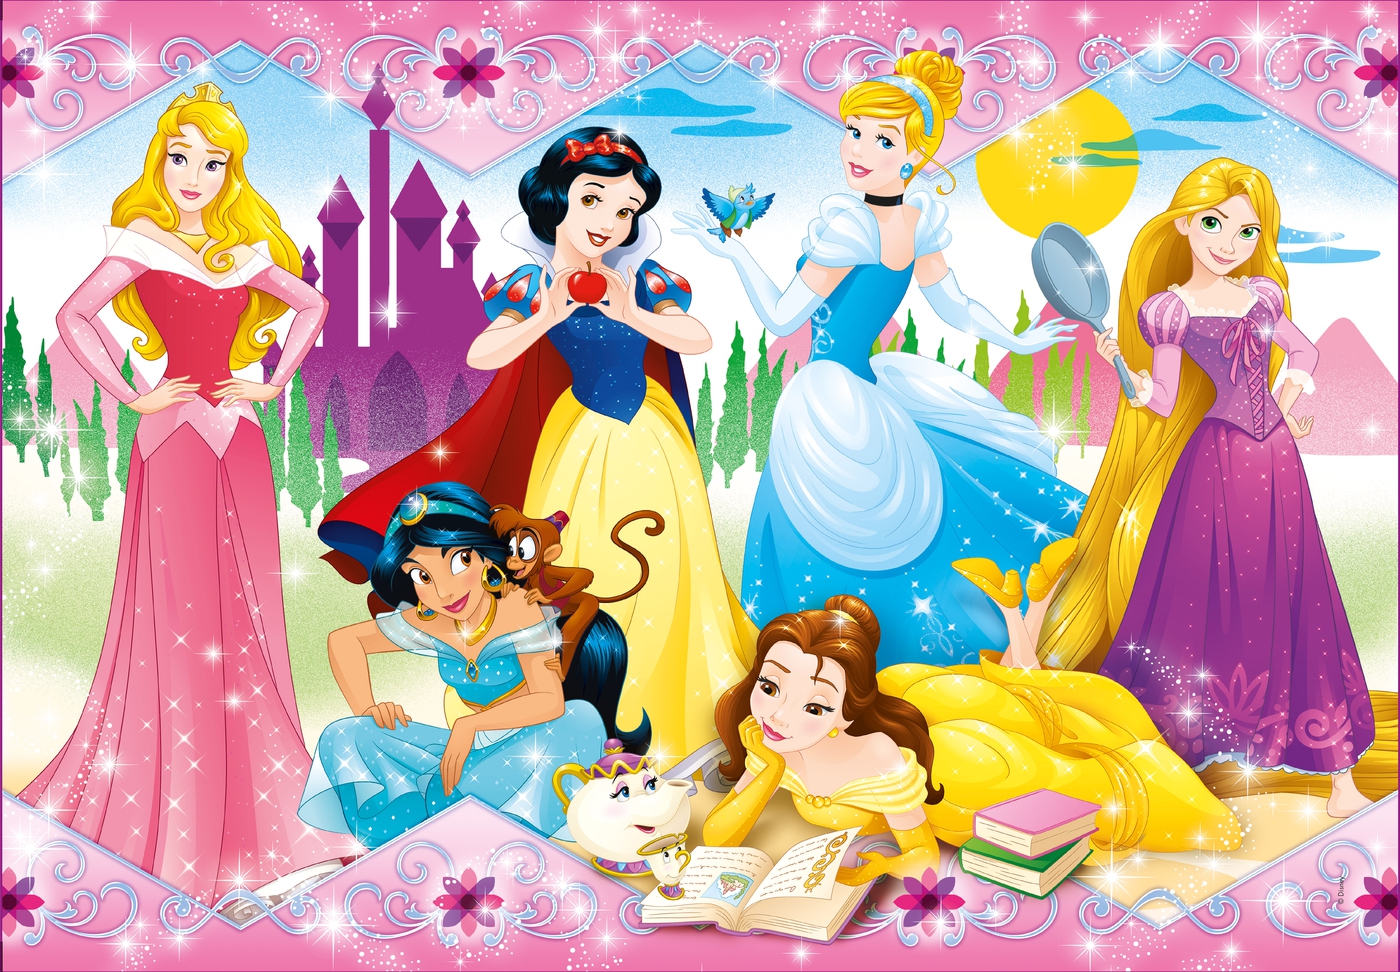 Clementoni Jigsaw Puzzle Disney Princess 104 Pcs For Children Kid Games Toy New 